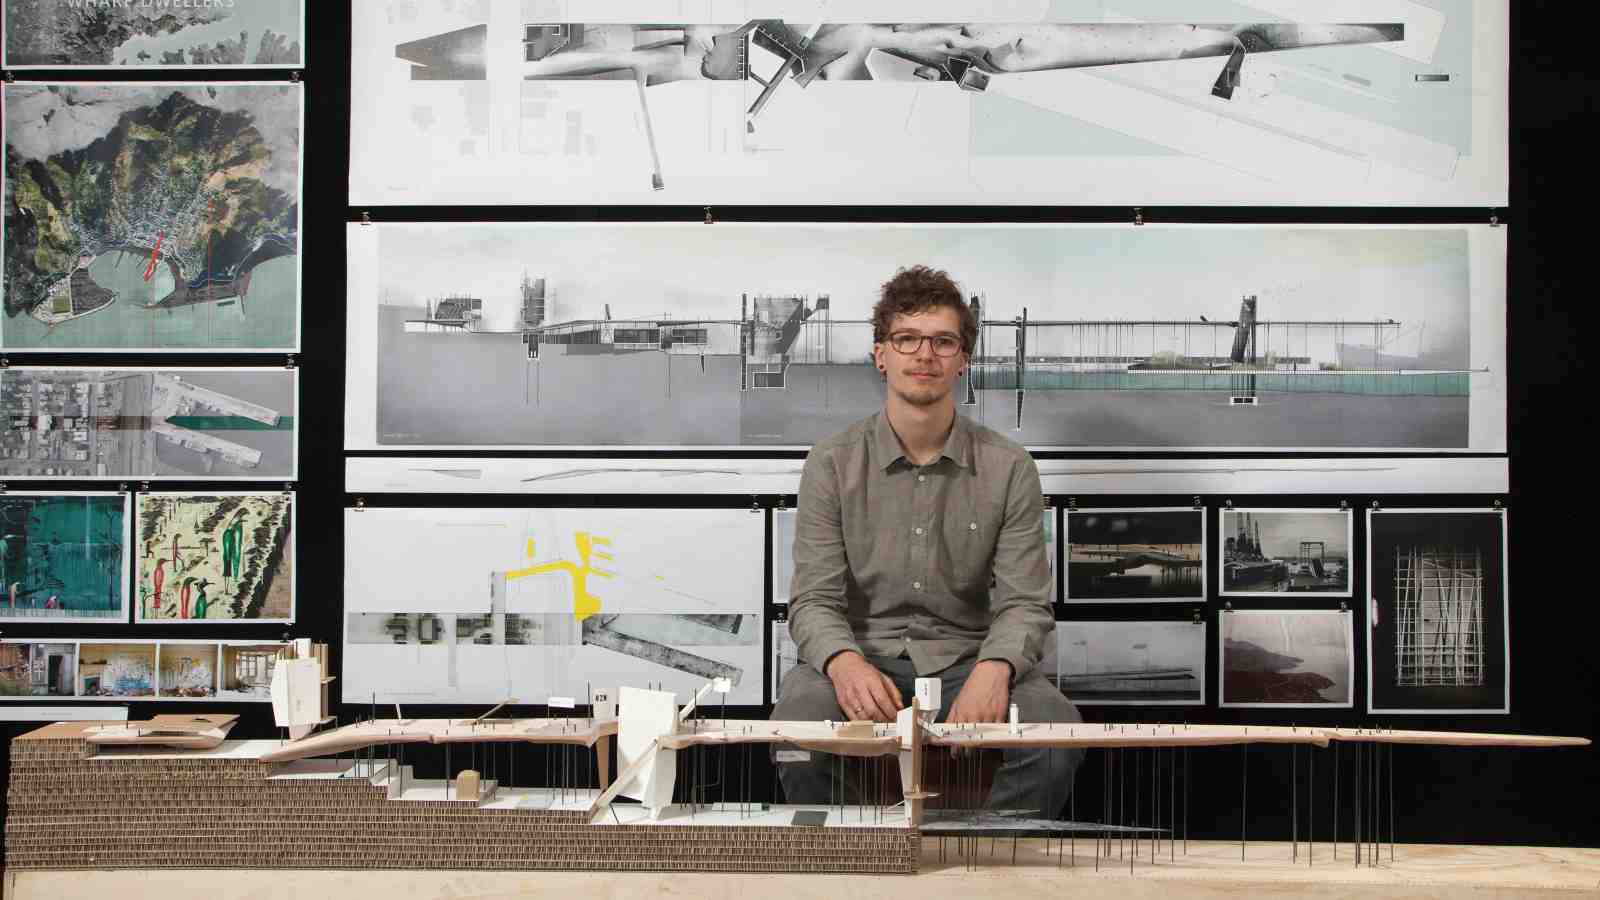 Tom Dobinson, winner of the 2014 New Zealand Institute of Architects’ Graphisoft Student Design Award